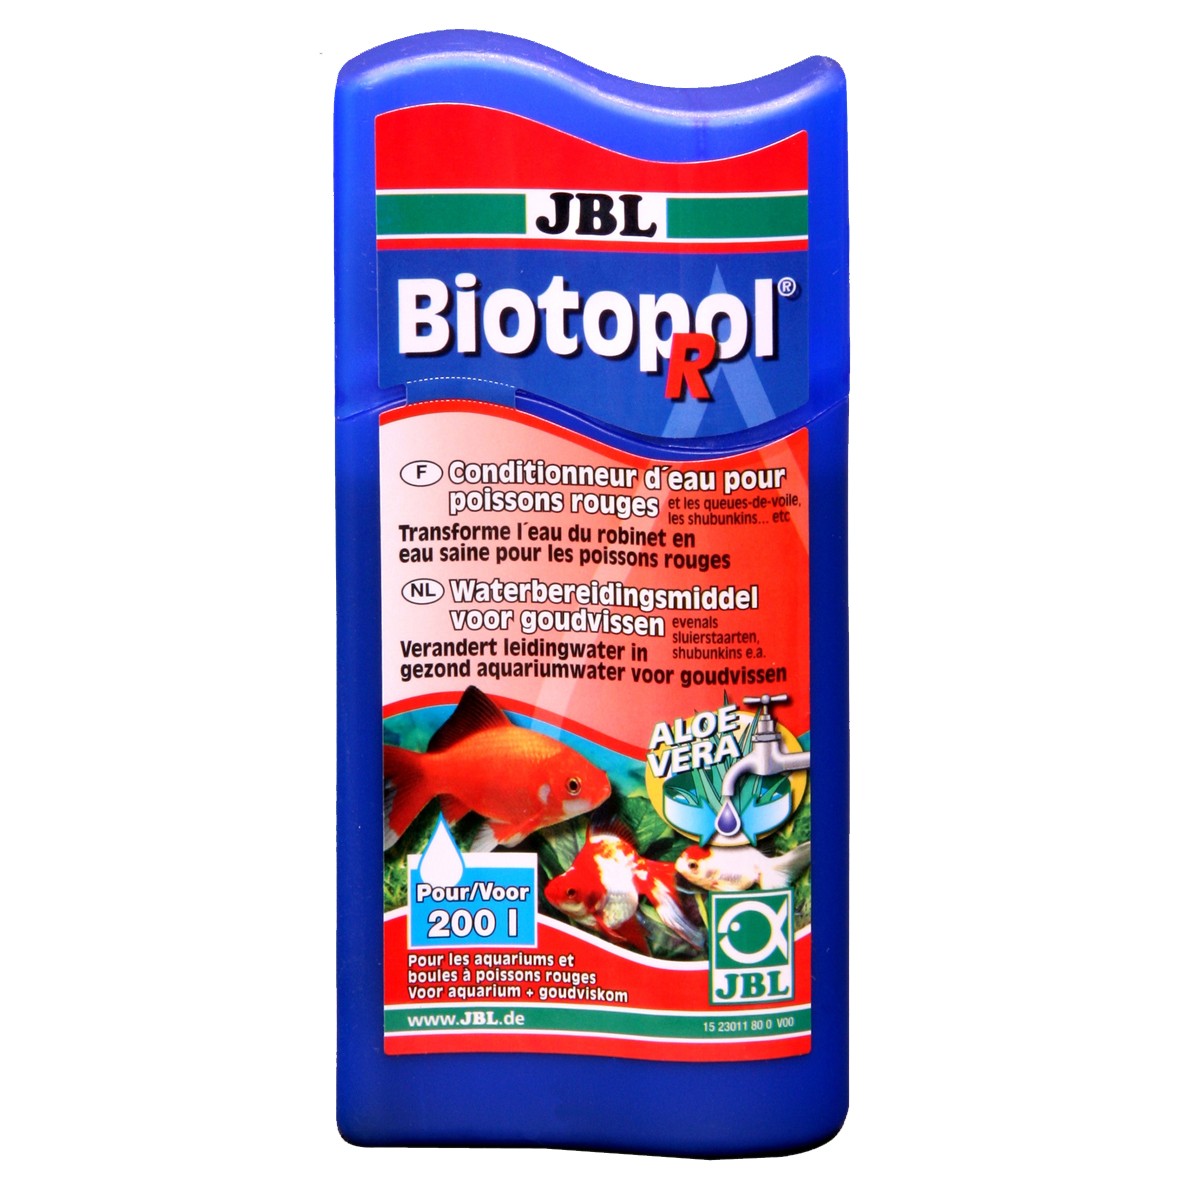 Jbl Biotopol R 100Ml  